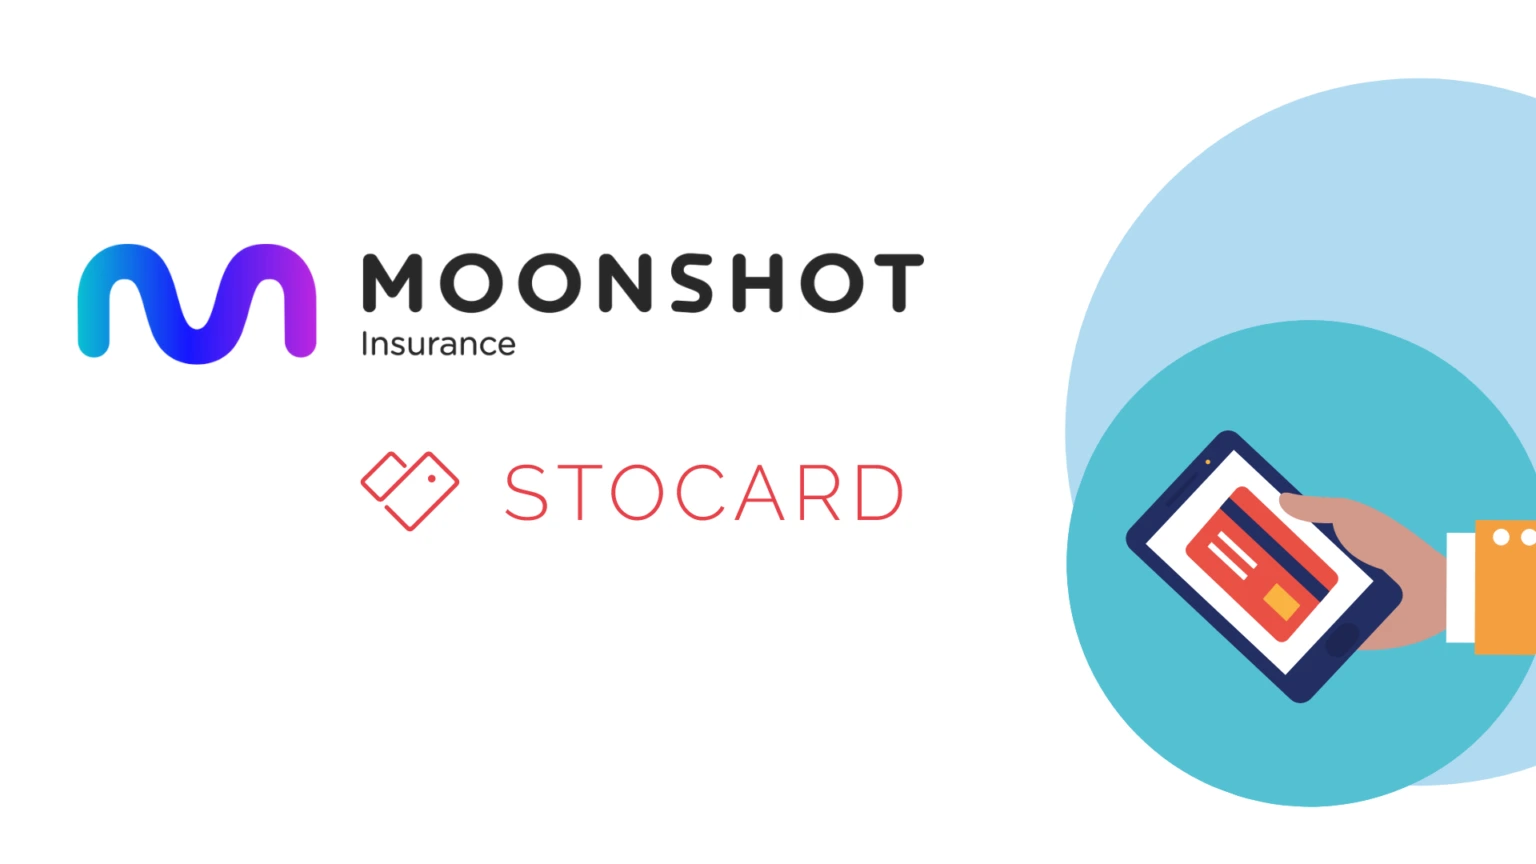 Moonshot Insurance accompagne la Fintech allemande Stocard